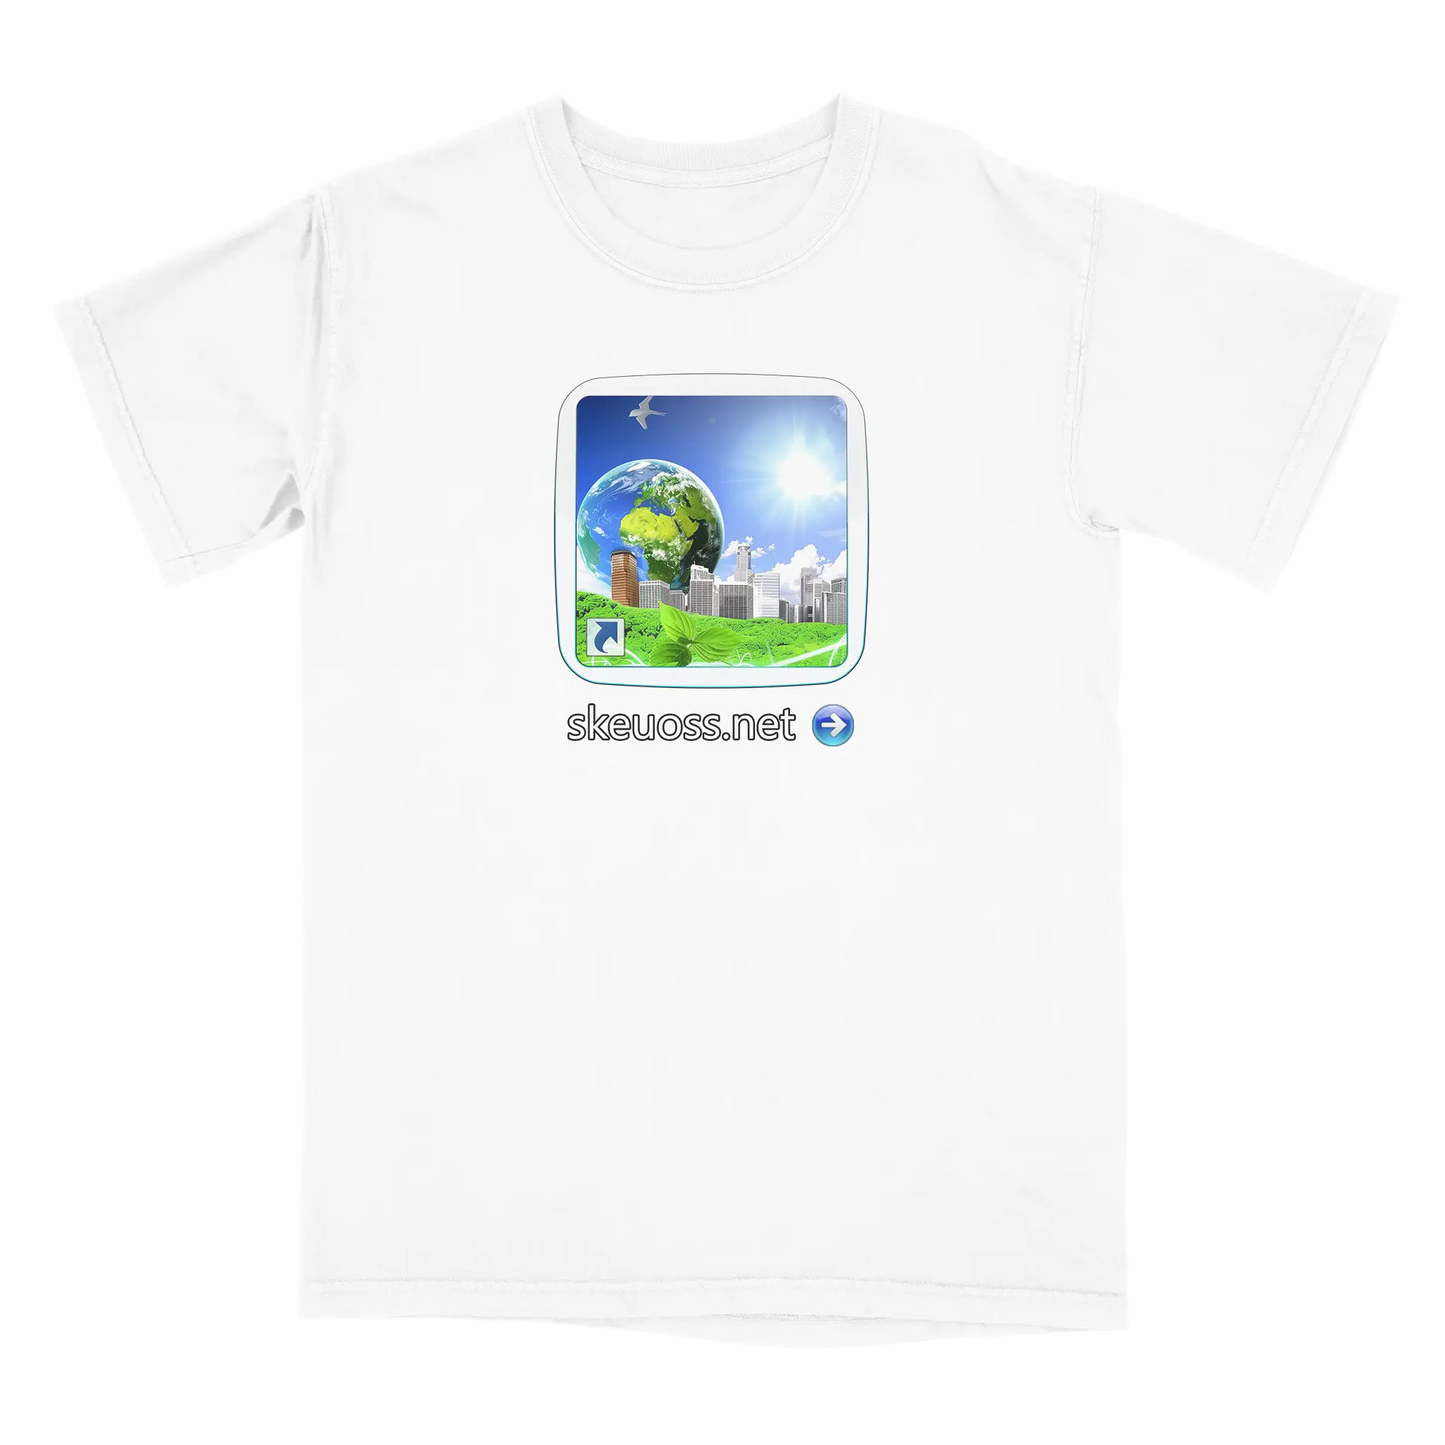 Frutiger Aero T-shirt - User Login Collection - User 363